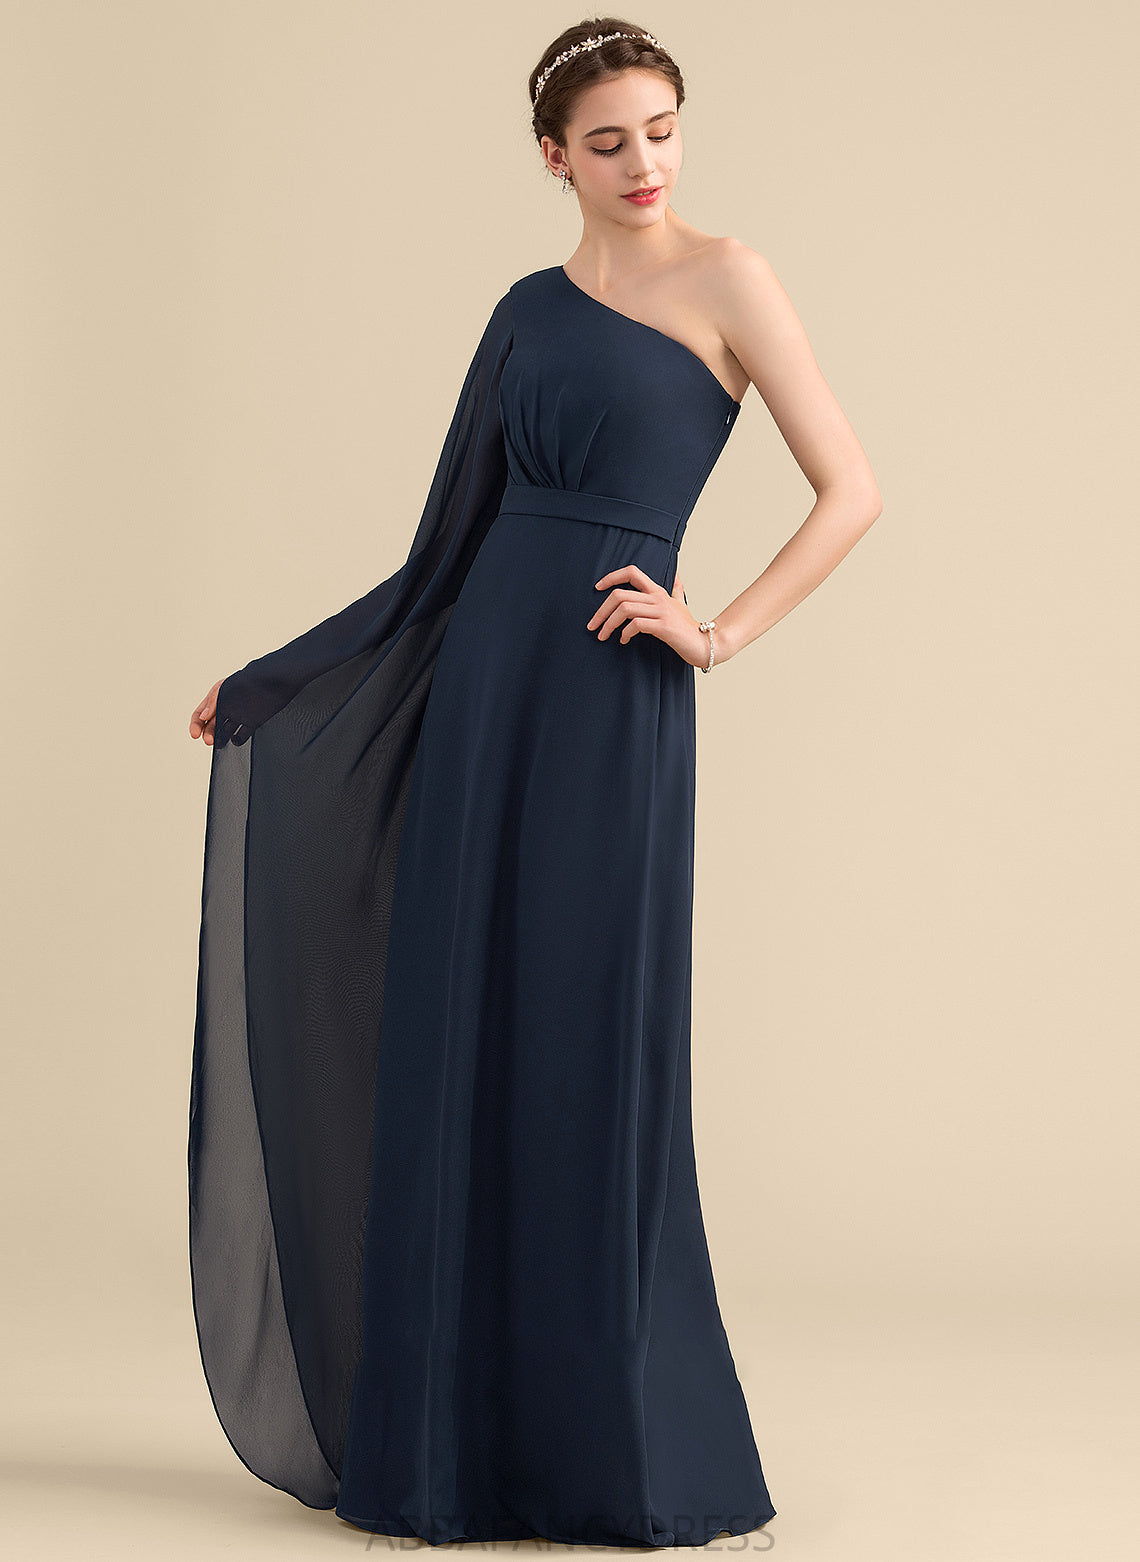 Embellishment Ruffle A-Line Silhouette Fabric Length One-Shoulder Floor-Length Neckline Sasha Velvet Trumpet/Mermaid